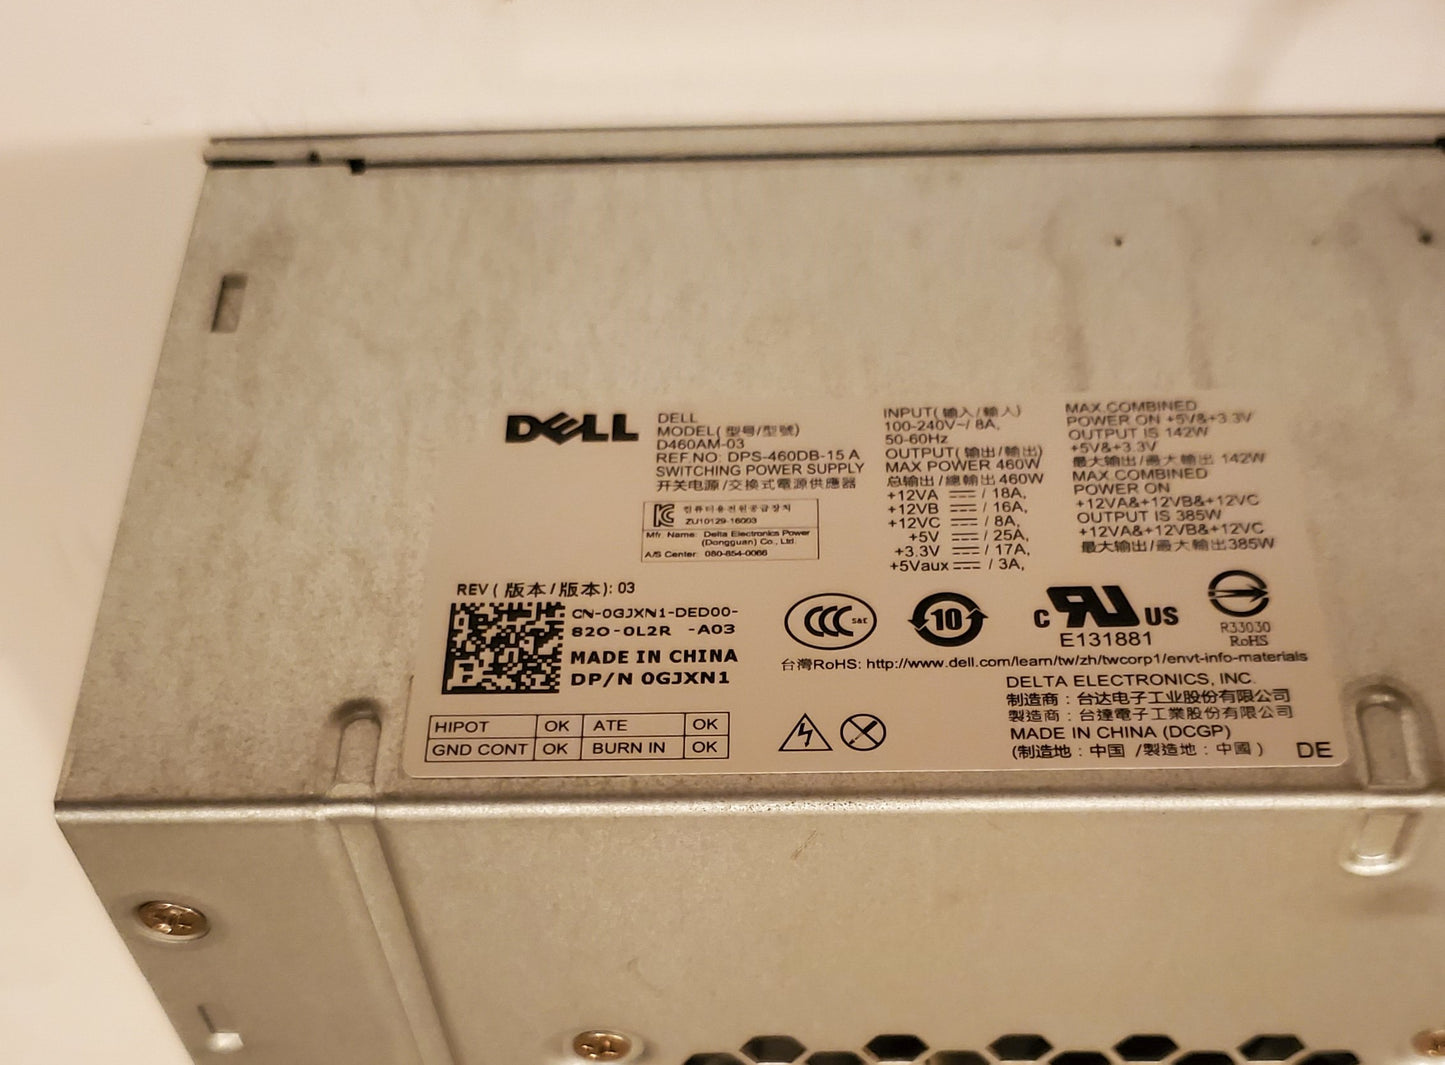 Dell D460AM-03 - 460W Power Supply - Rekes Sales